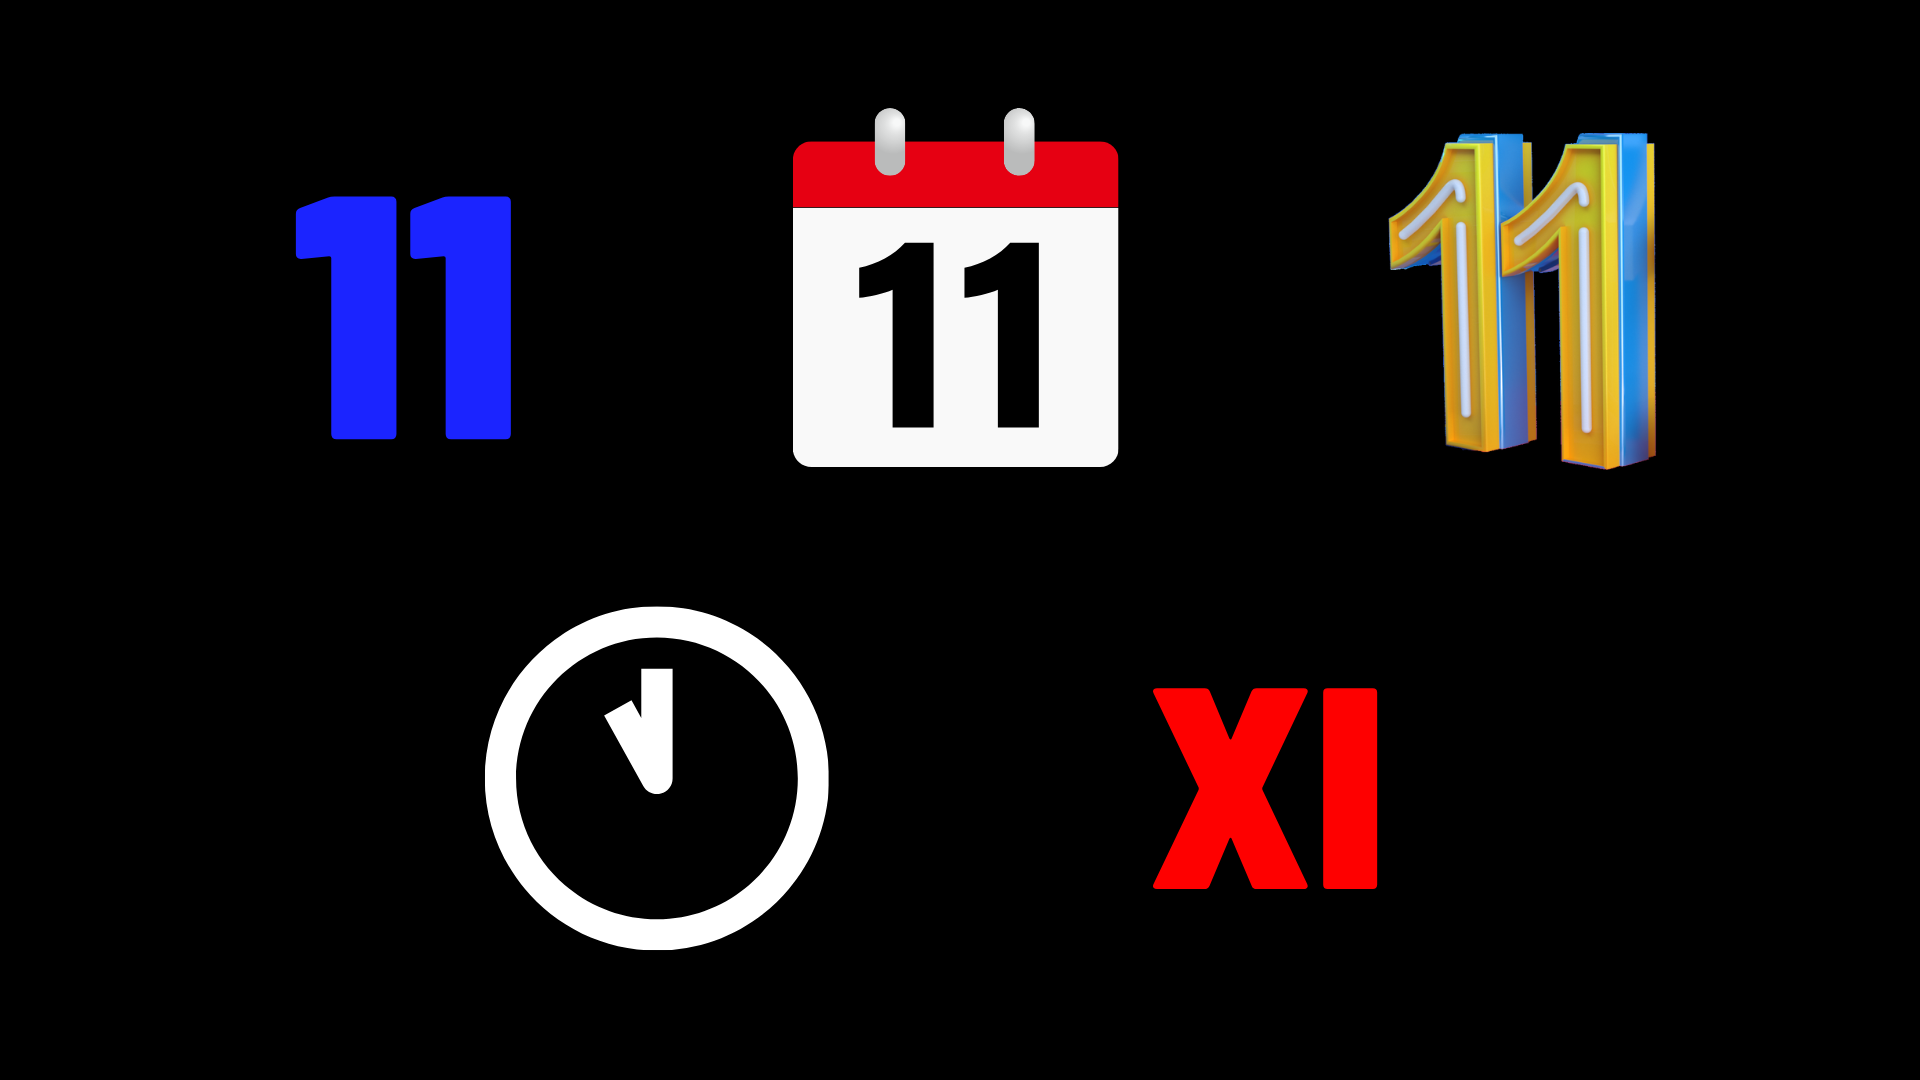 Symbols for 11